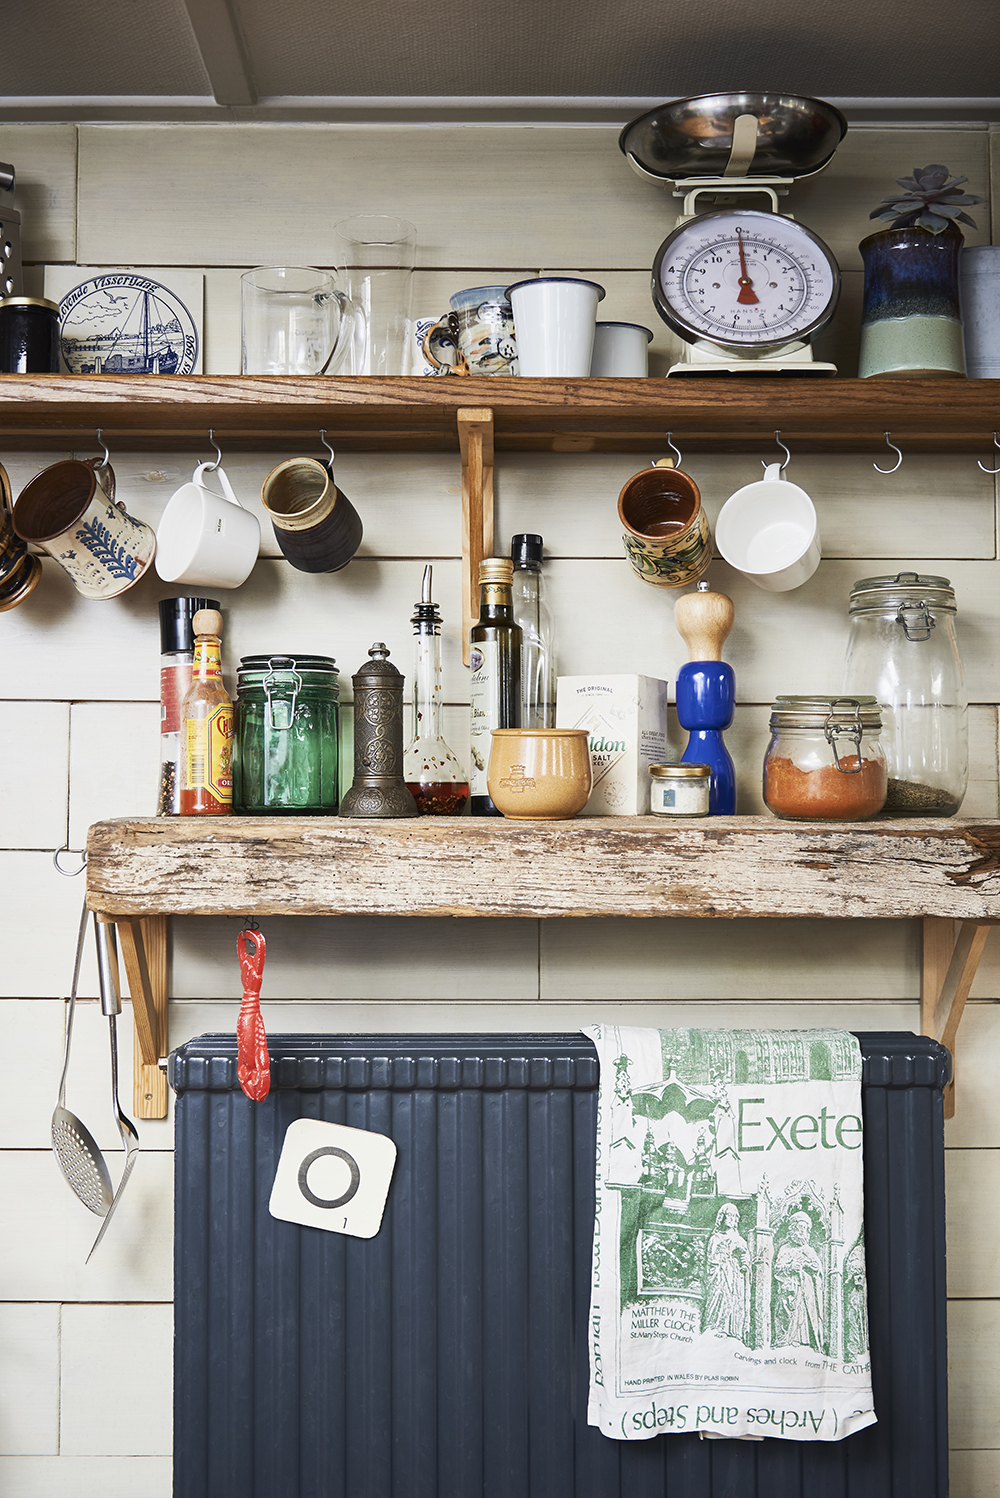 London house boat tour - reclaimed kitchen shelving